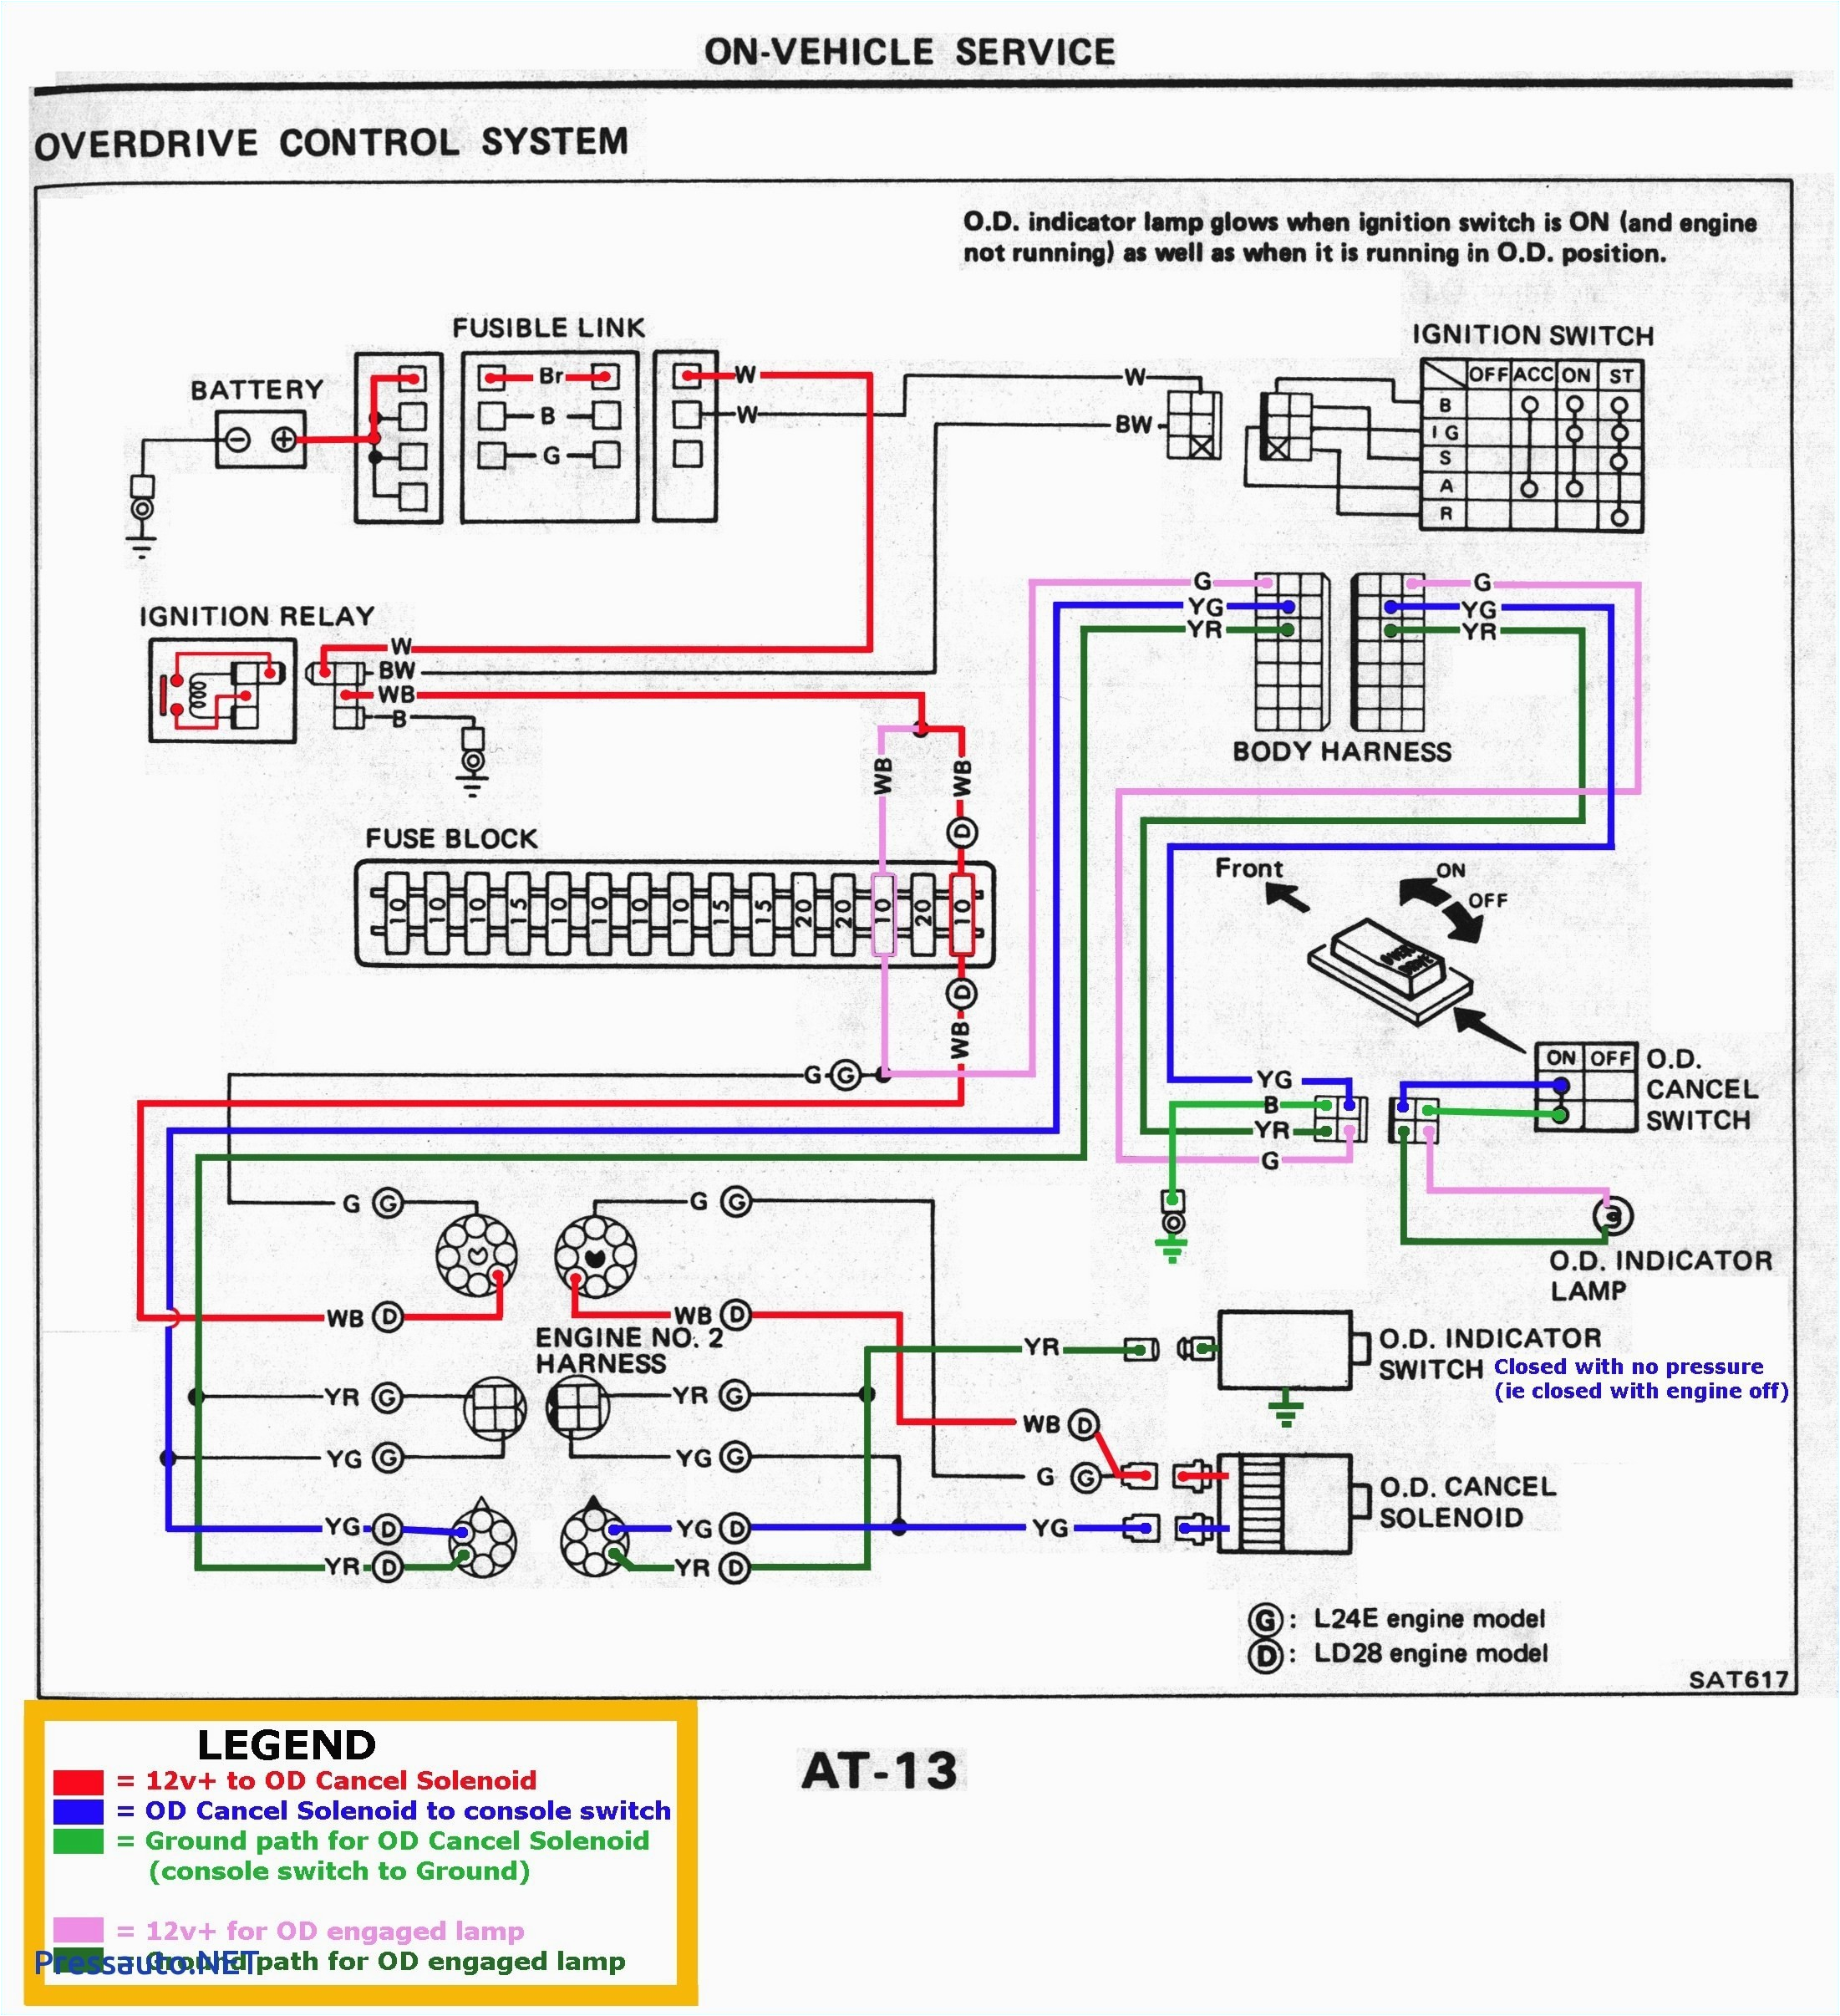 John Deere Gator Ignition Switch Wiring Diagram Peg Perego Wiring Diagram Wiring Library